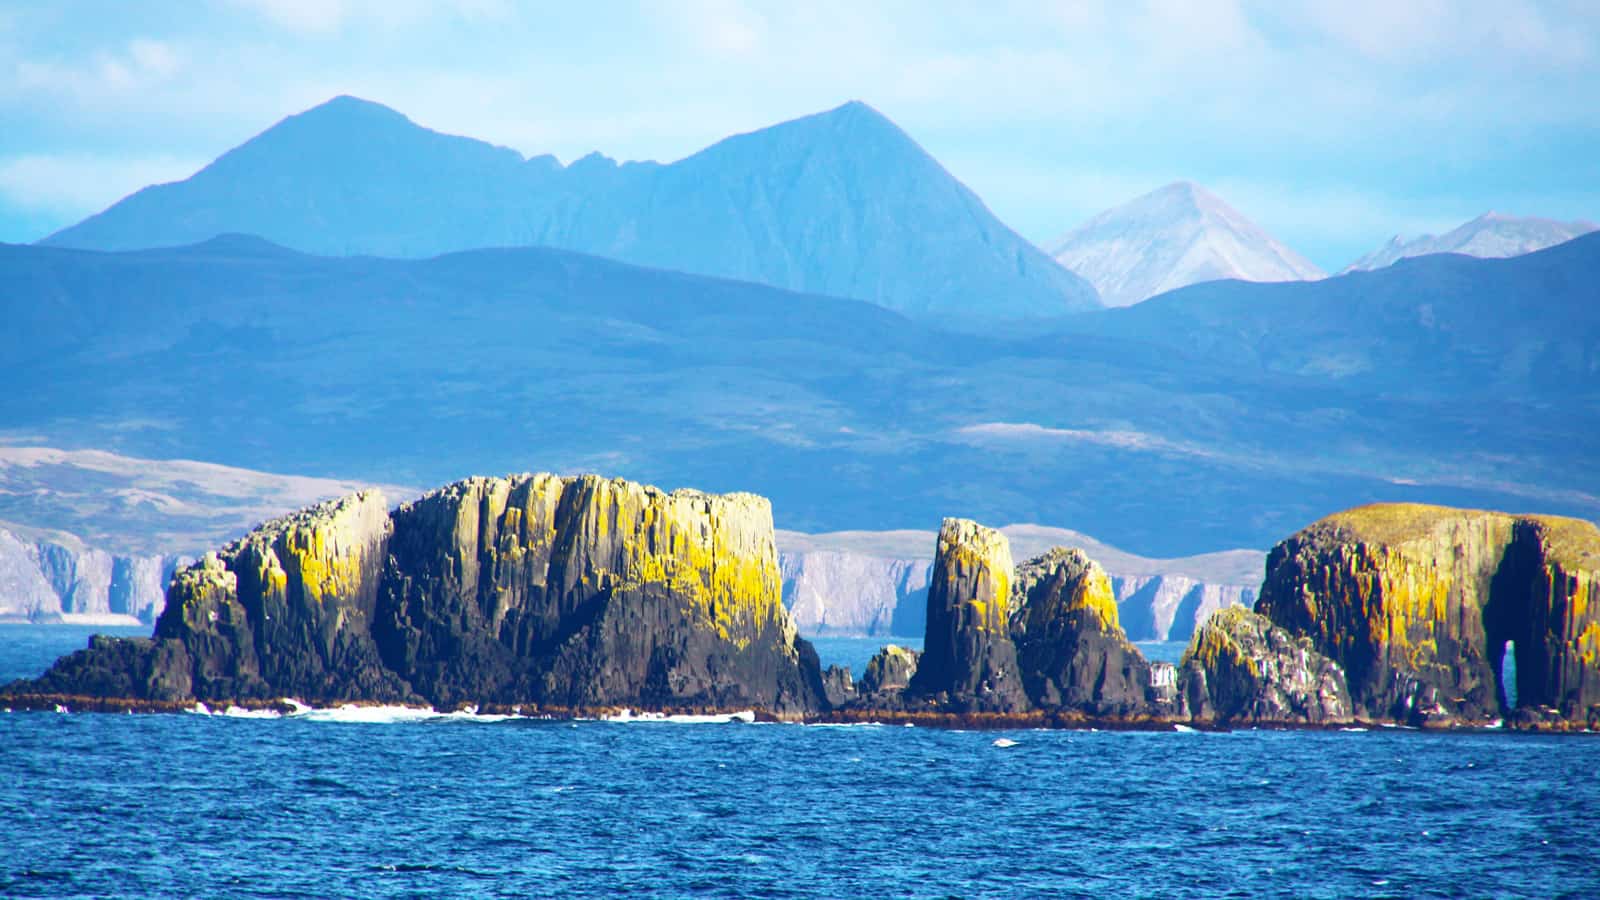 Alaska, Coast of Unga Island-Aleutian Islands, United States 1600x900